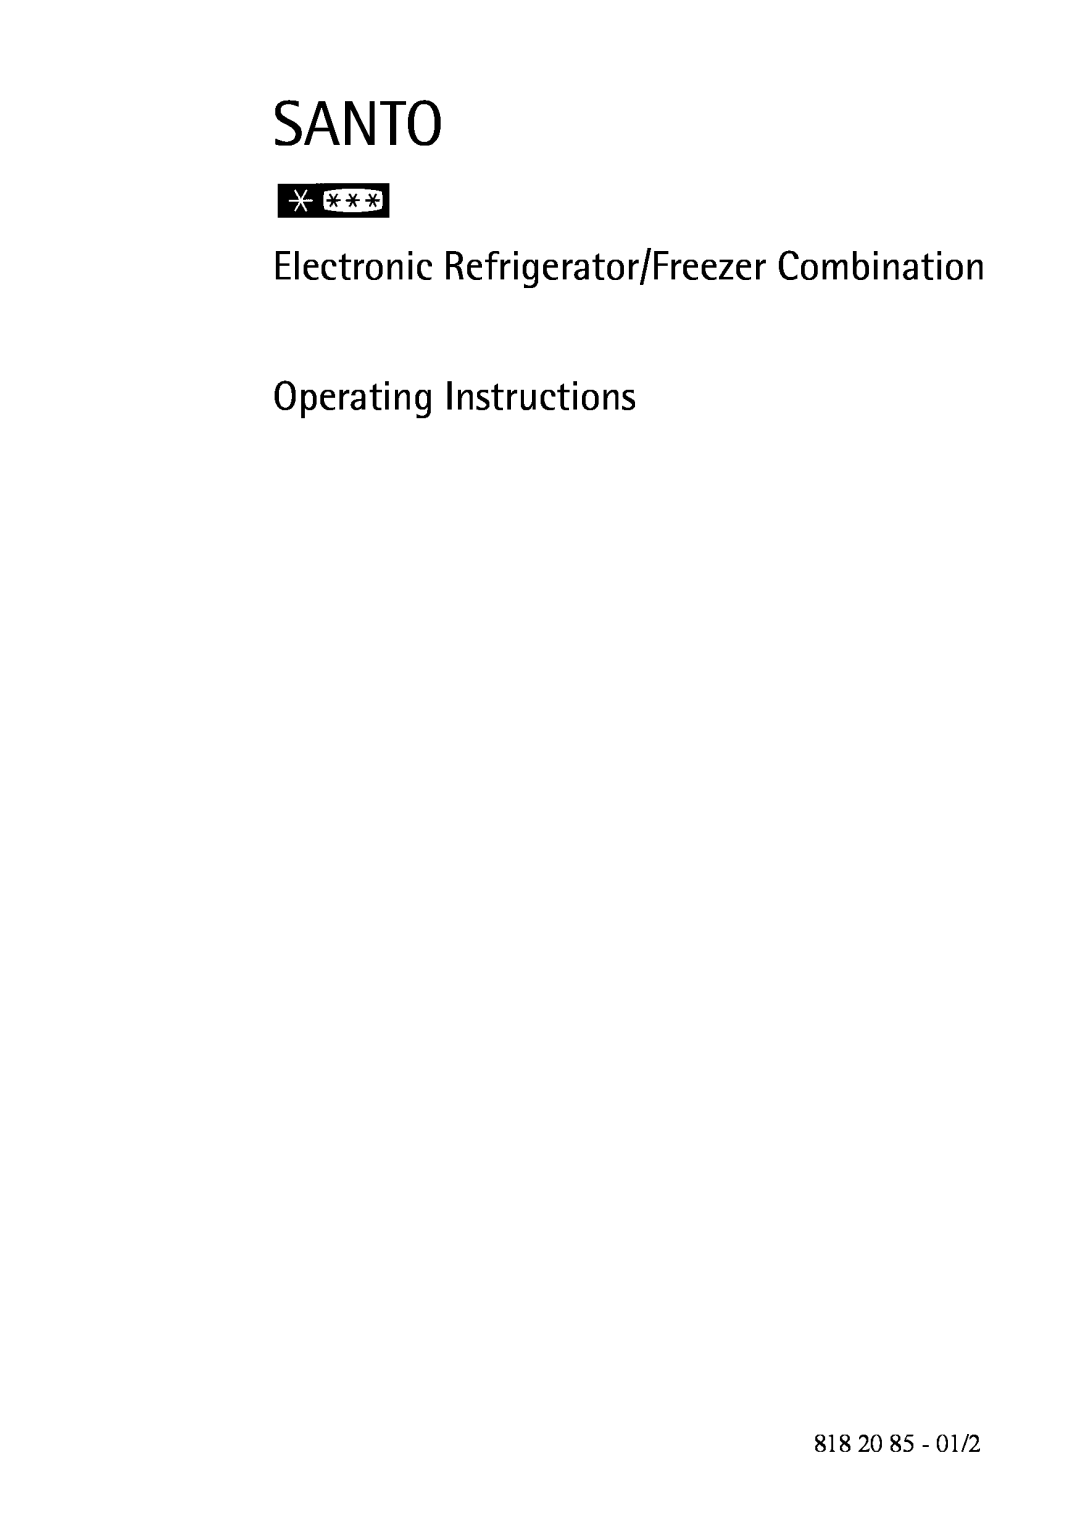 Electrolux 818 20 85 operating instructions Santo, Electronic Refrigerator/Freezer Combination Operating Instructions 